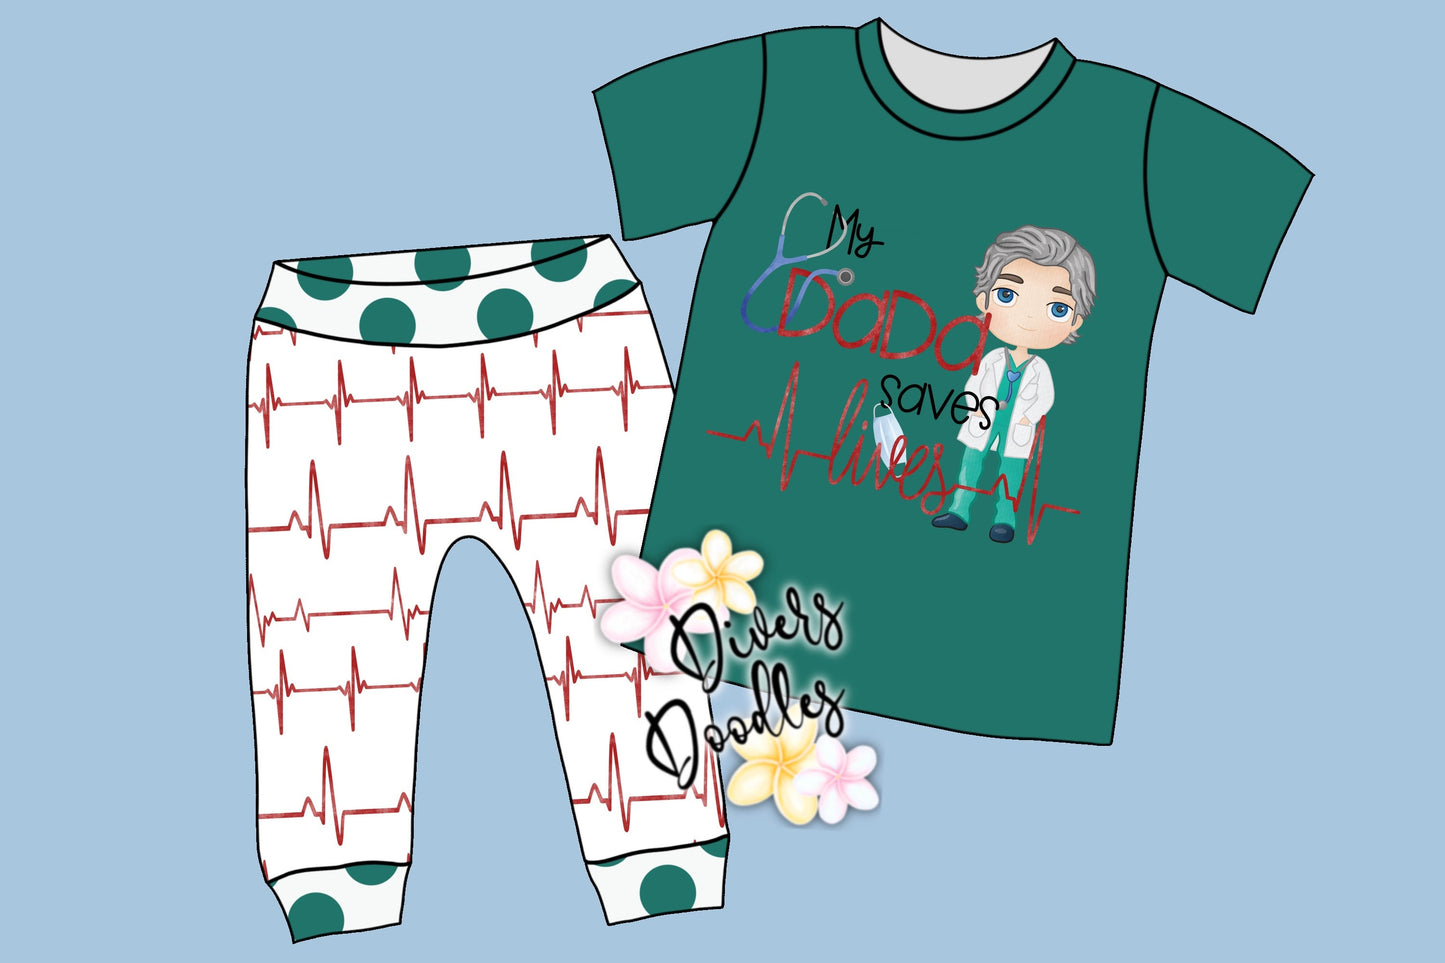 Daddy PNG, Doctor Illustration, Sublimation Designs for Kids, Commercial Use PNG, Medical PNG Files for Tshirts, Waterslide Digital Download